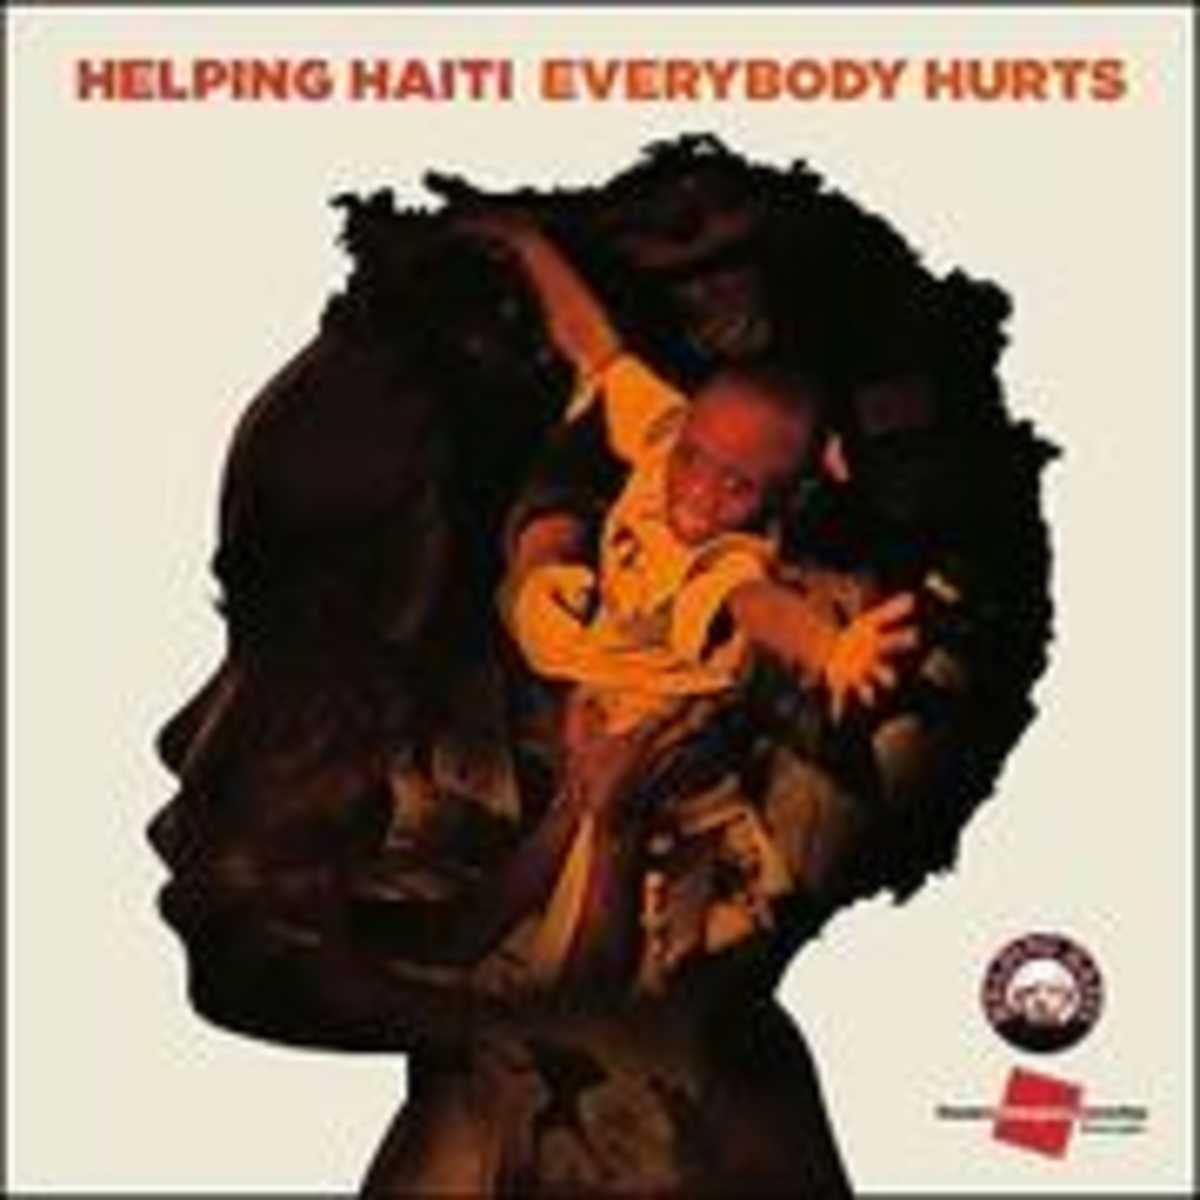 Helping Haiti - Evrybody Hurts